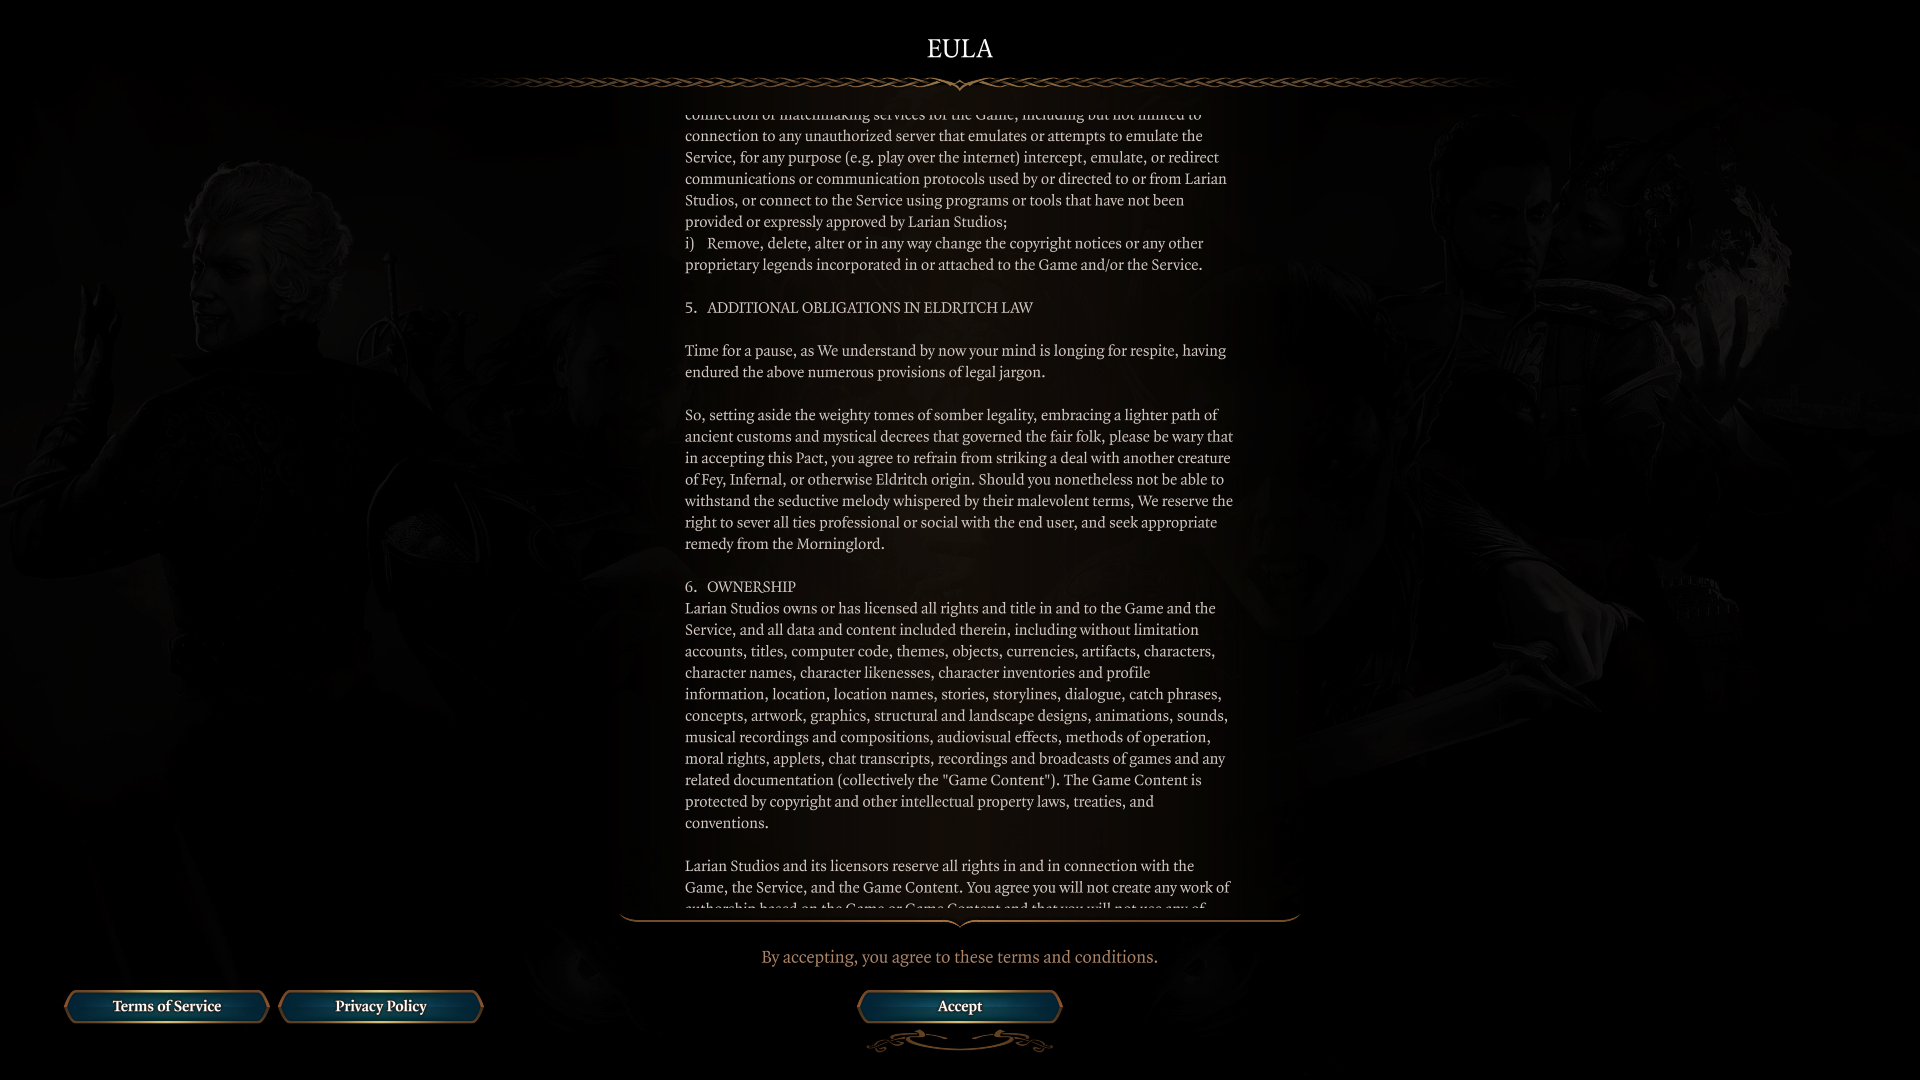 A screenshot of the EULA agreement from Larian Studios for Baldur's Gate 3